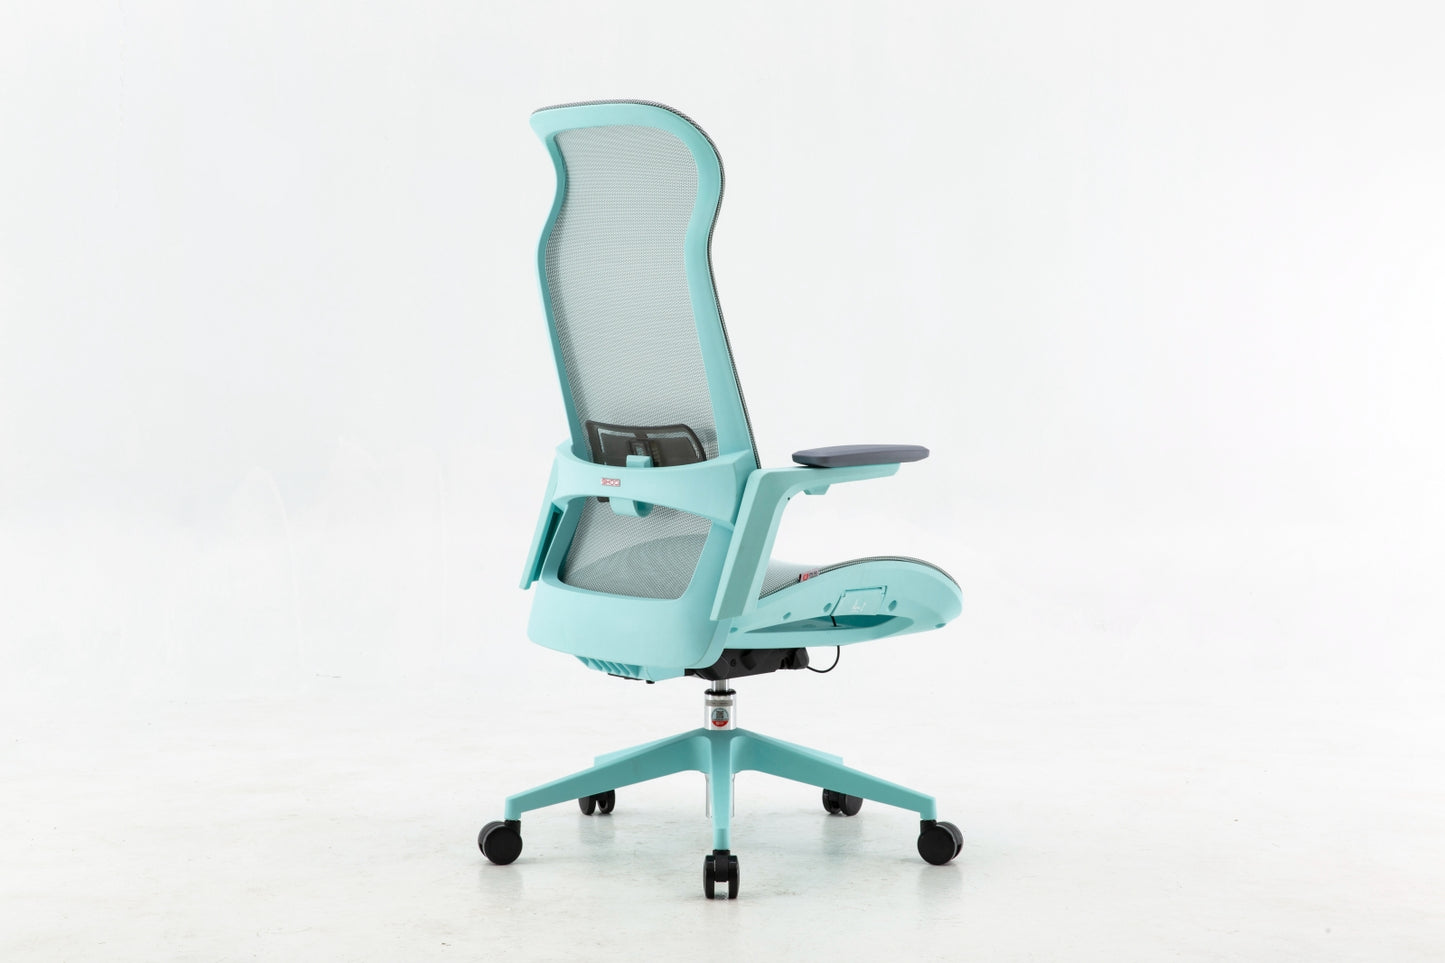 Sihoo M98C Ergonomic Chair